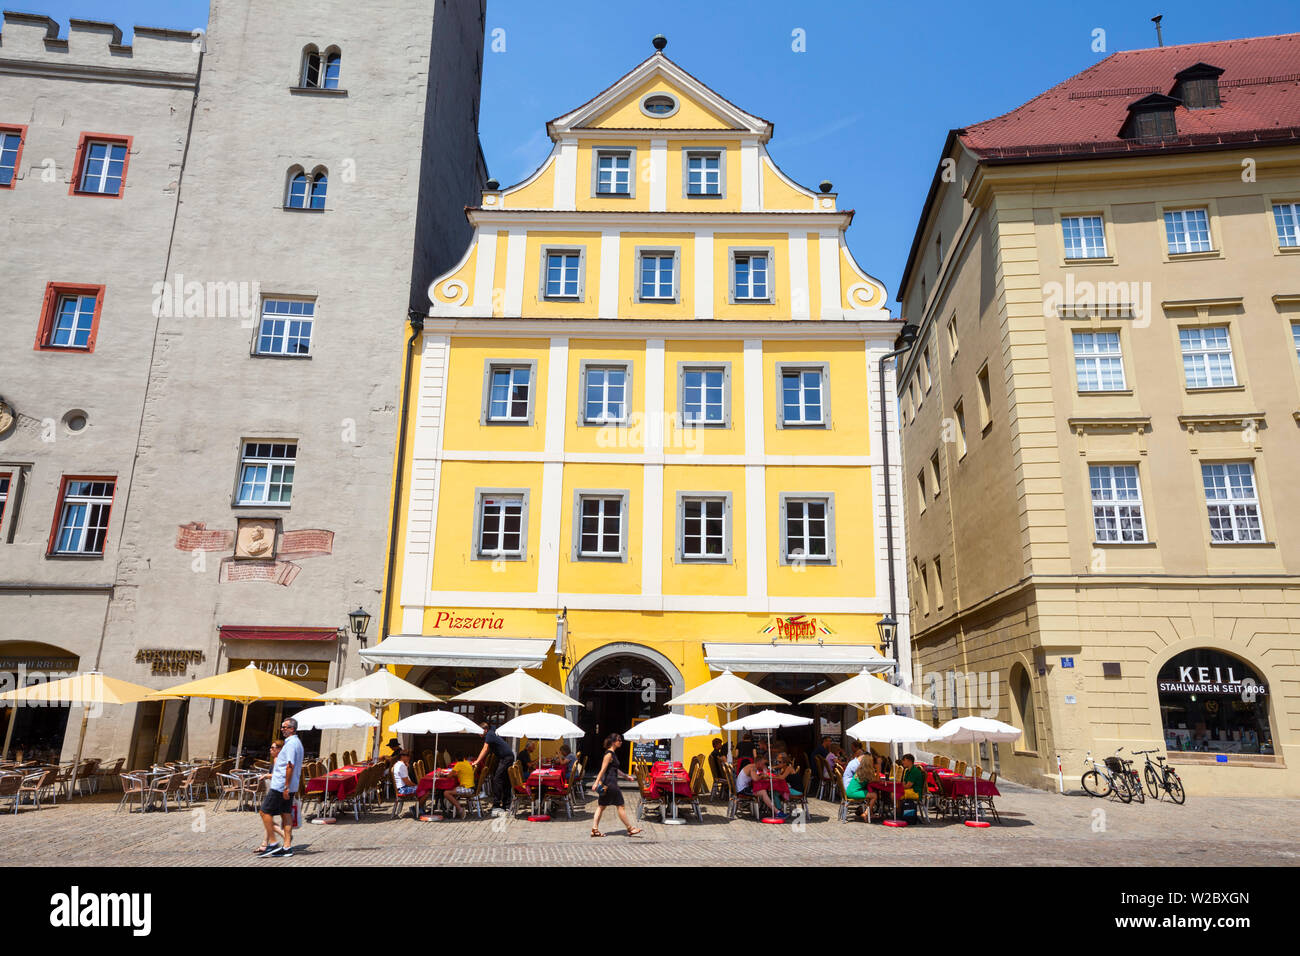 Haidplatz Square, Old Town, Regensburg, Upper Palatinate, Bavaria, Germany Stock Photo